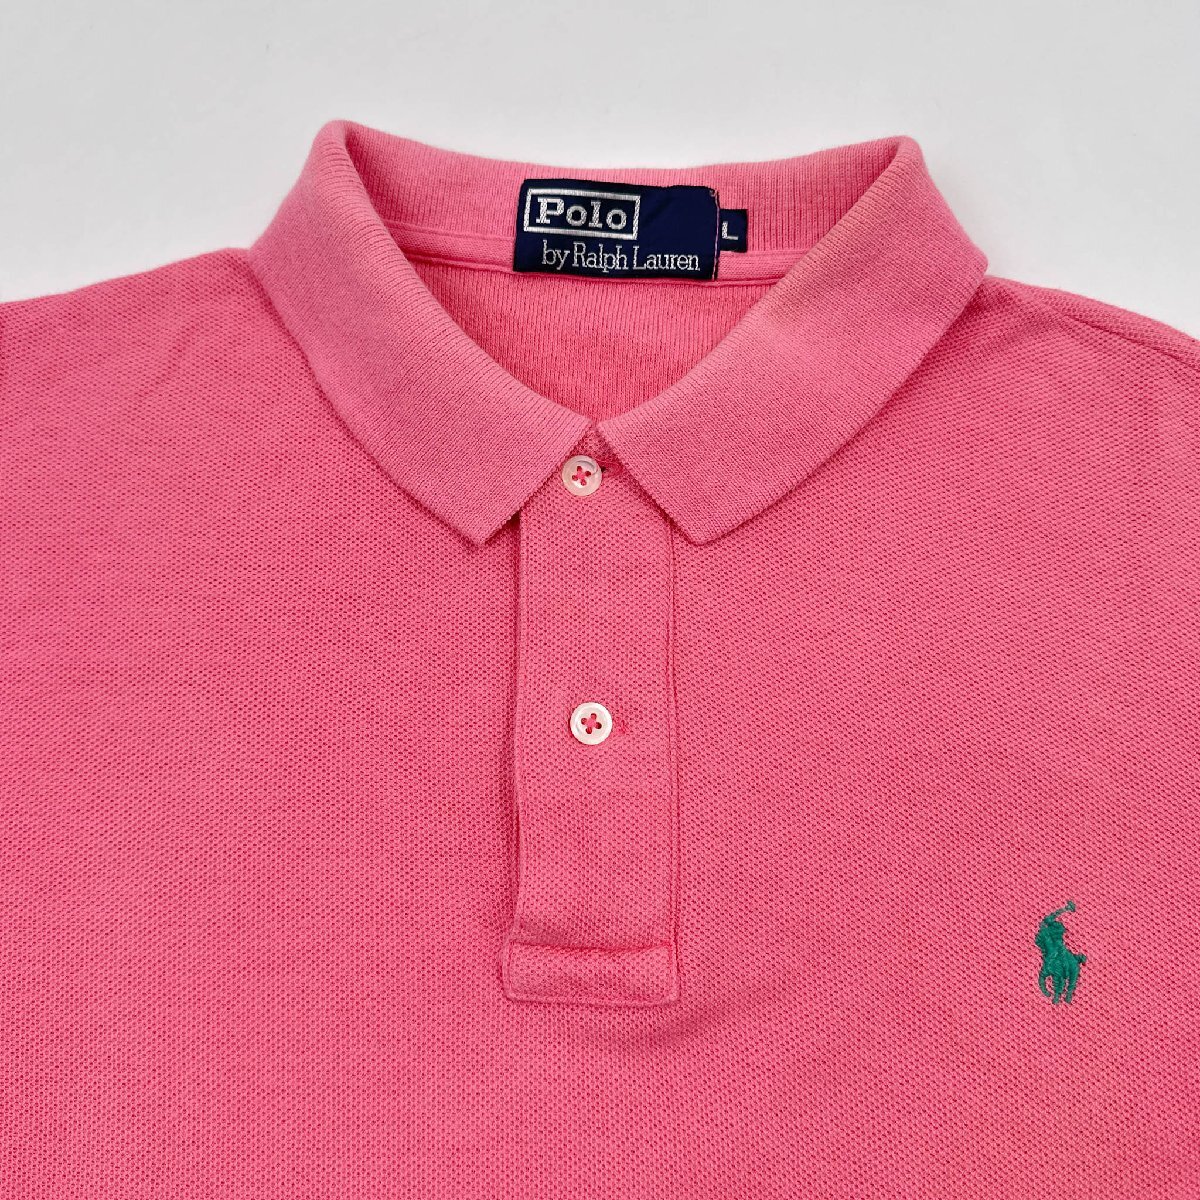 Polo by Ralph Lauren ポロラルフローレン 鹿の子 長袖 ポロシャツ Lサイズ / ピンク ビンテージ ナイガイ代理_画像3